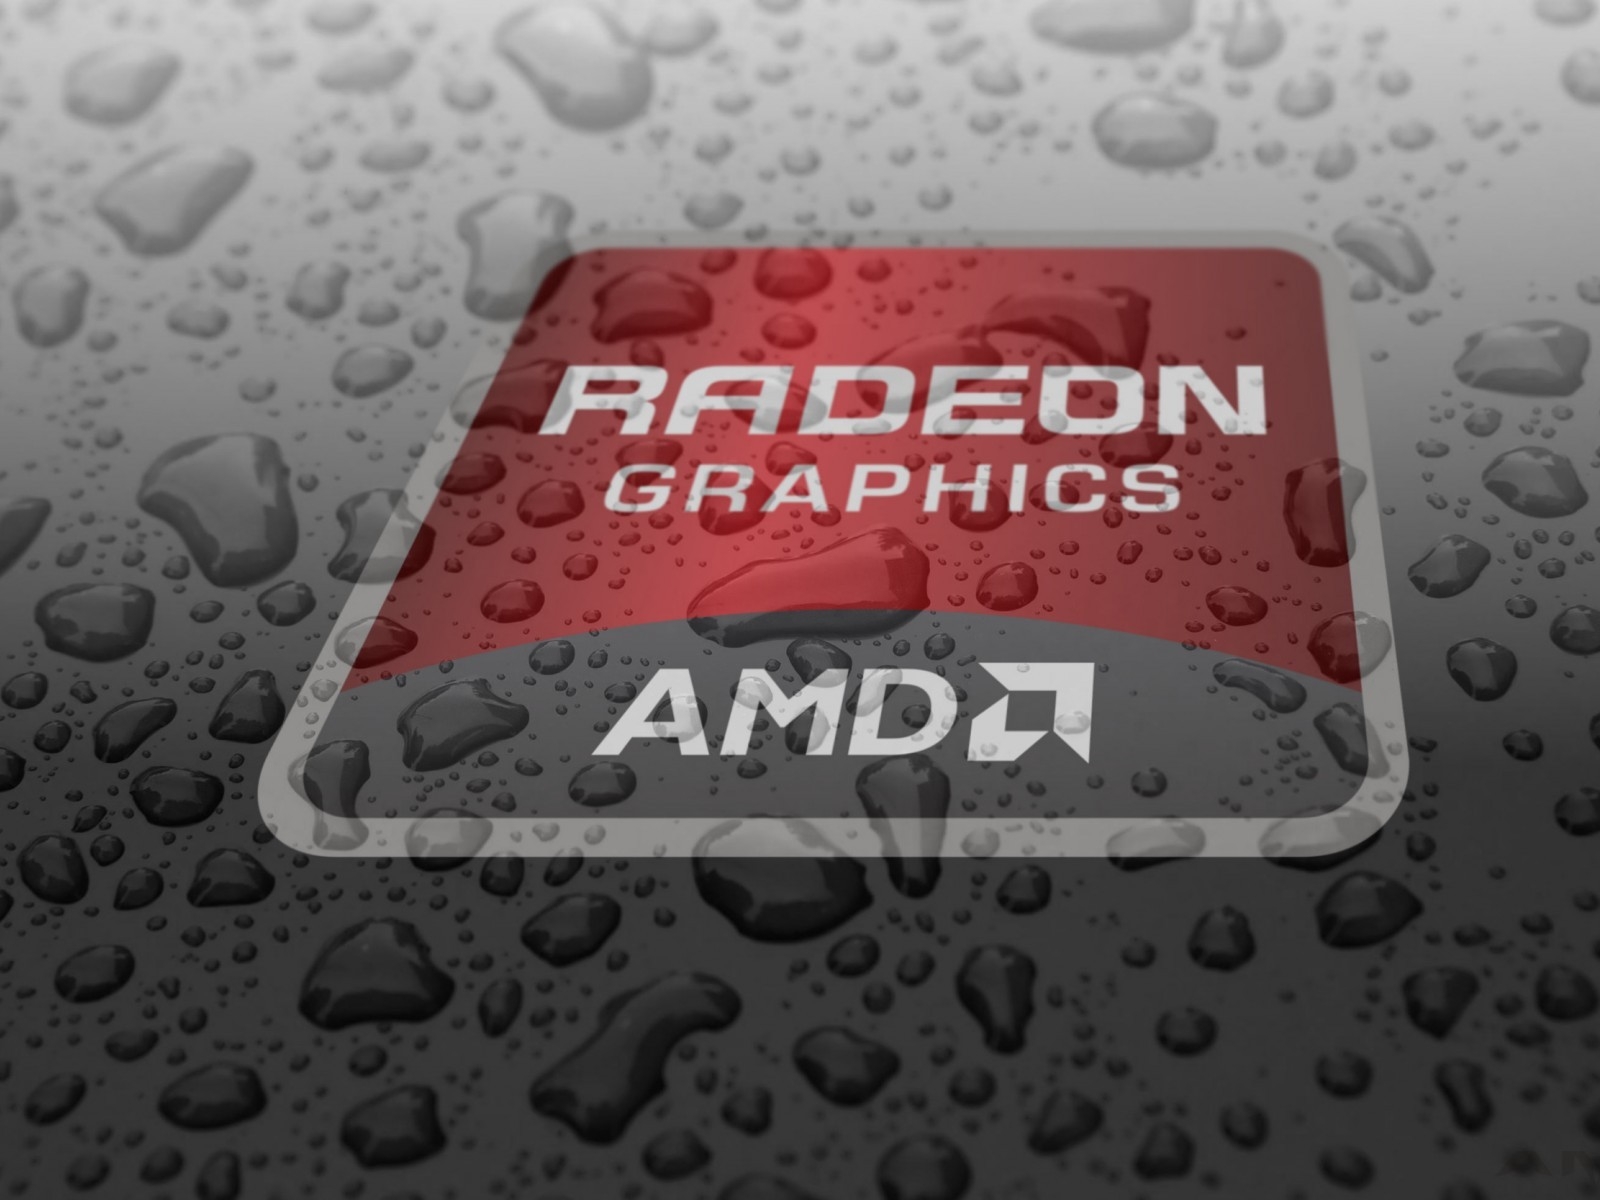 Radeon Graphics AMD for 1600 x 1200 resolution